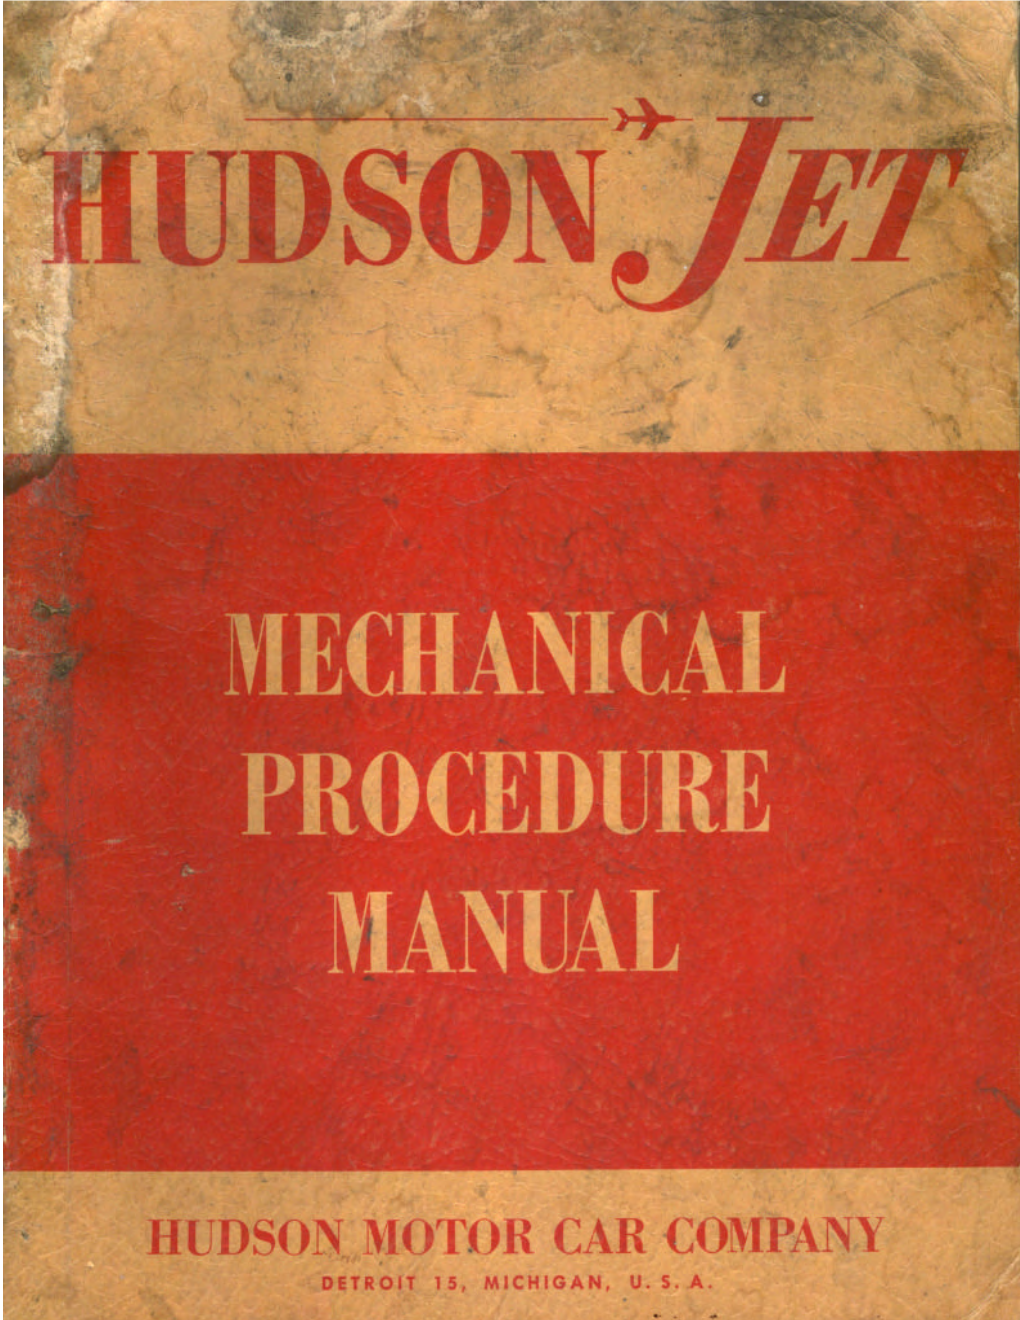 1953 Hudson Jet Shop Manual